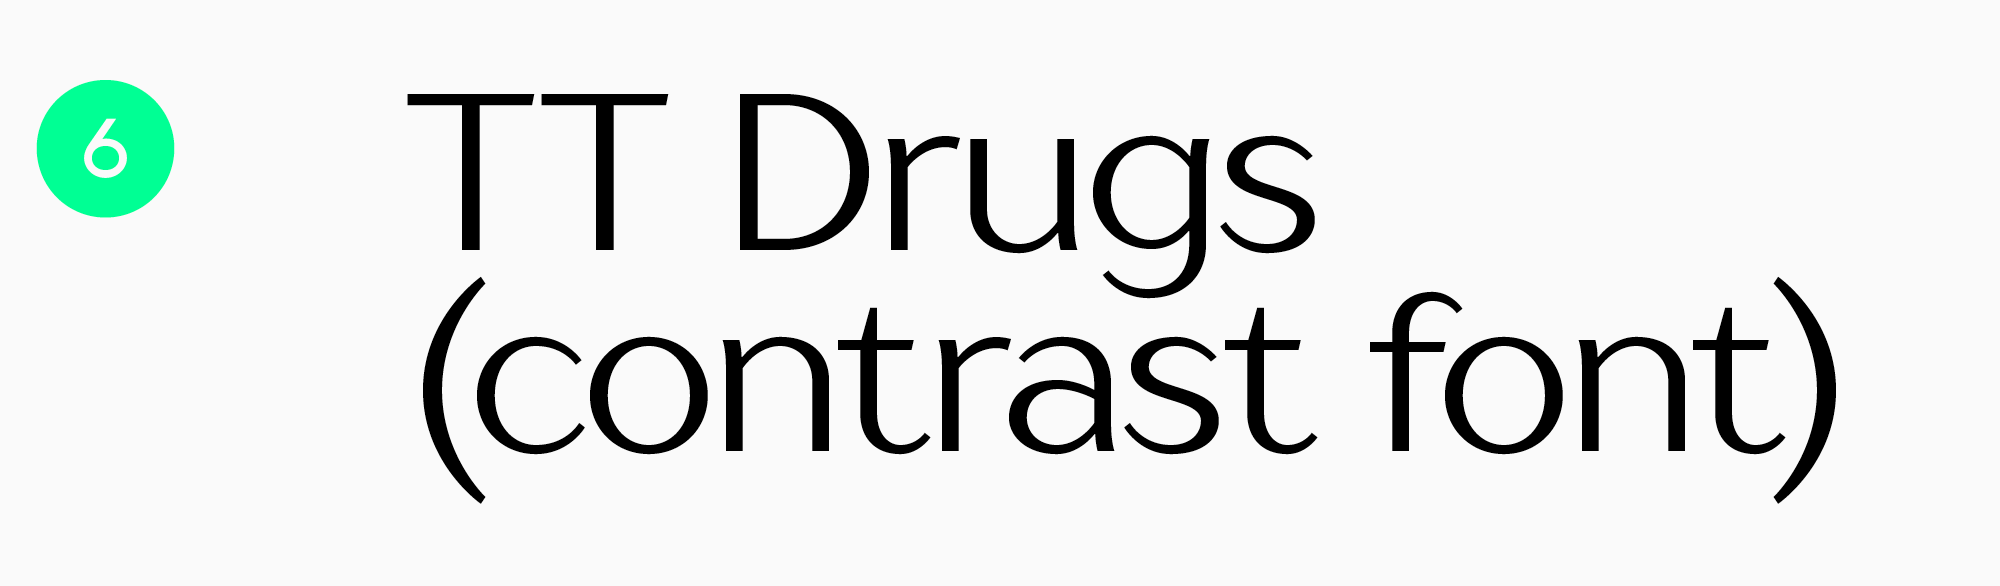 лучший шрифт для упаковки -TT Drugs